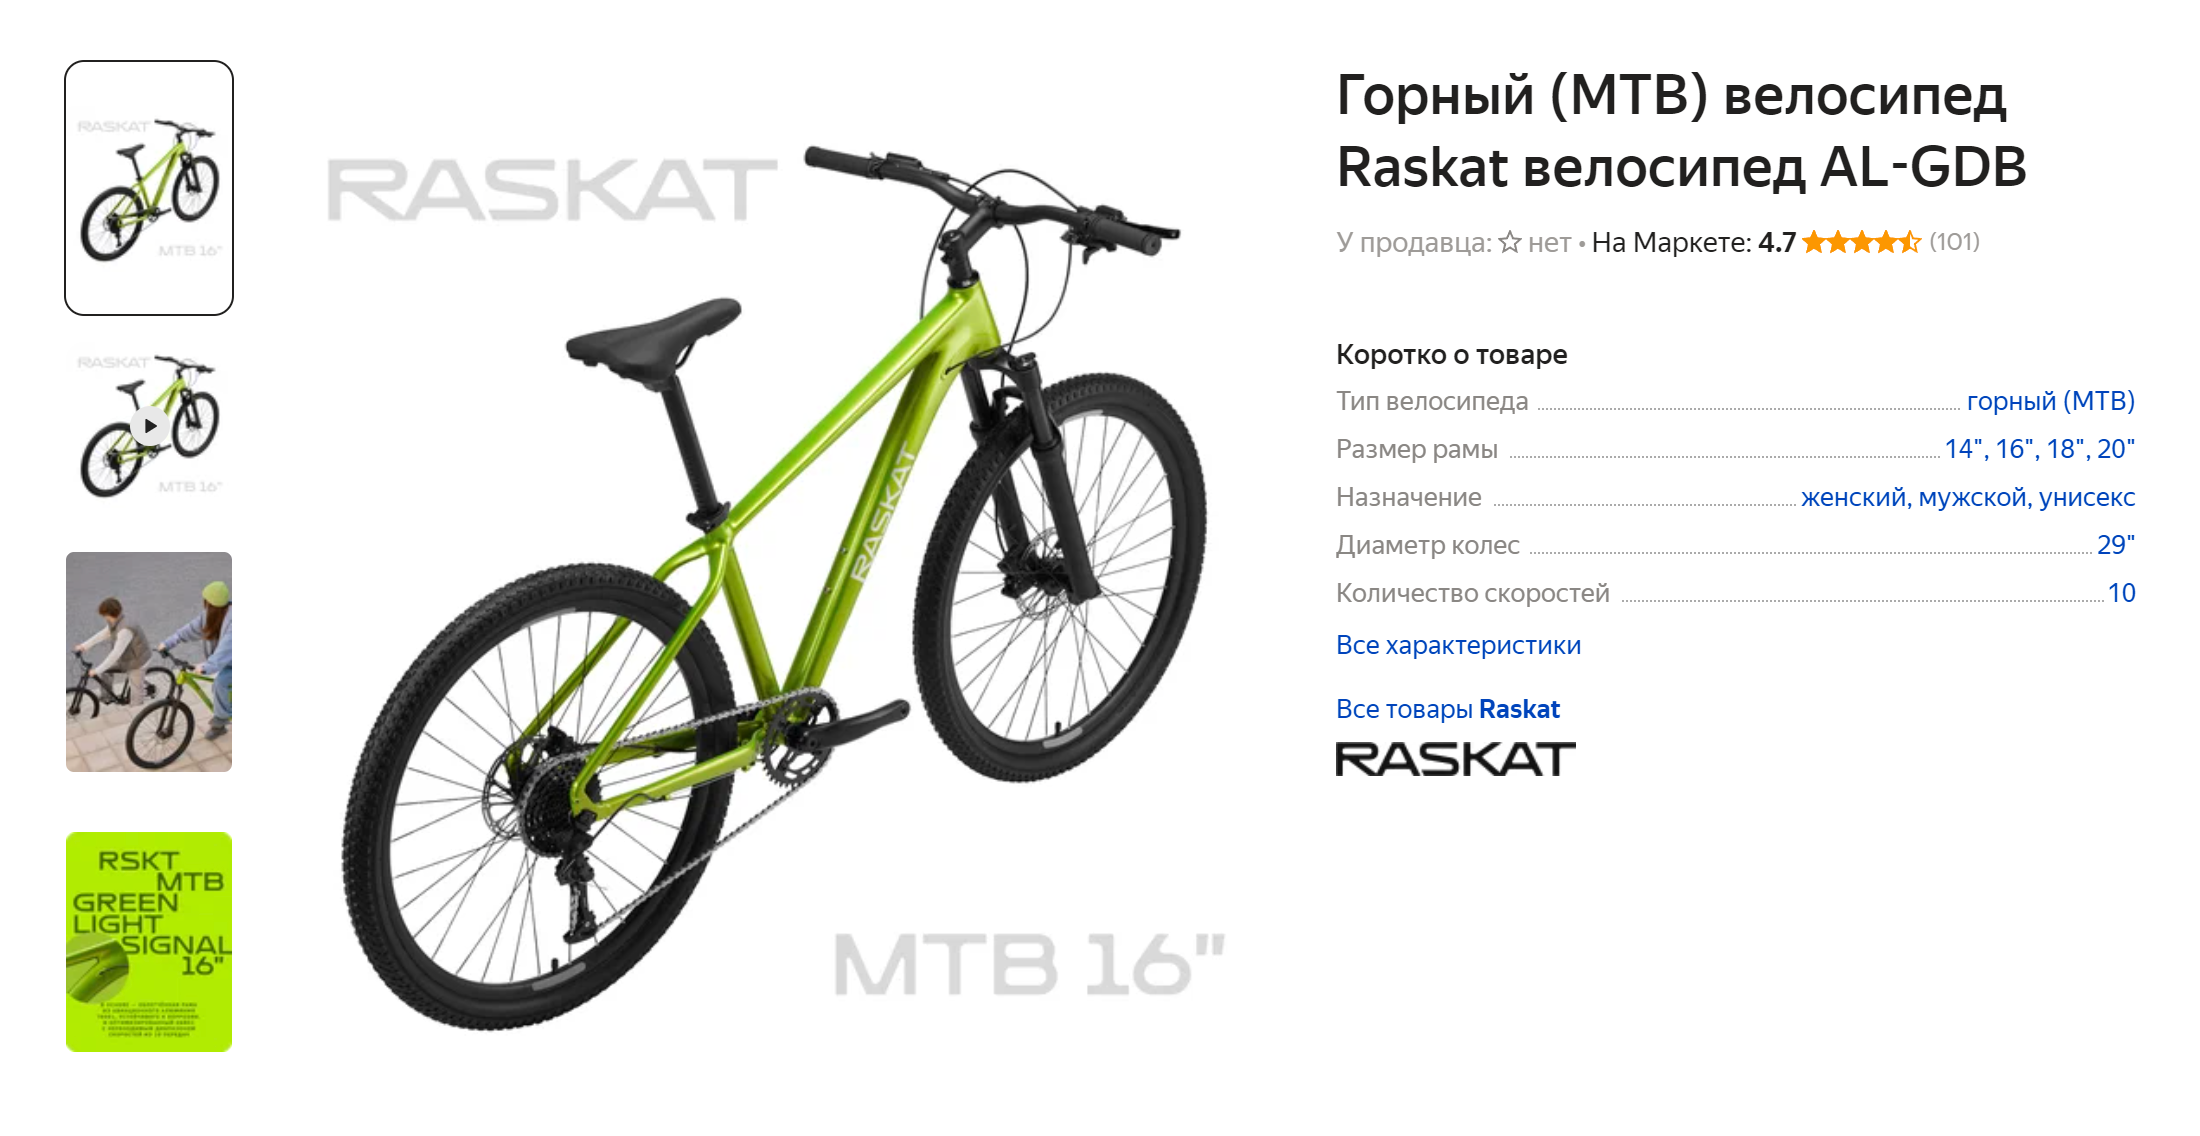 Raskat — СТМ «Яндекс Маркета». Источник: market.yandex.ru